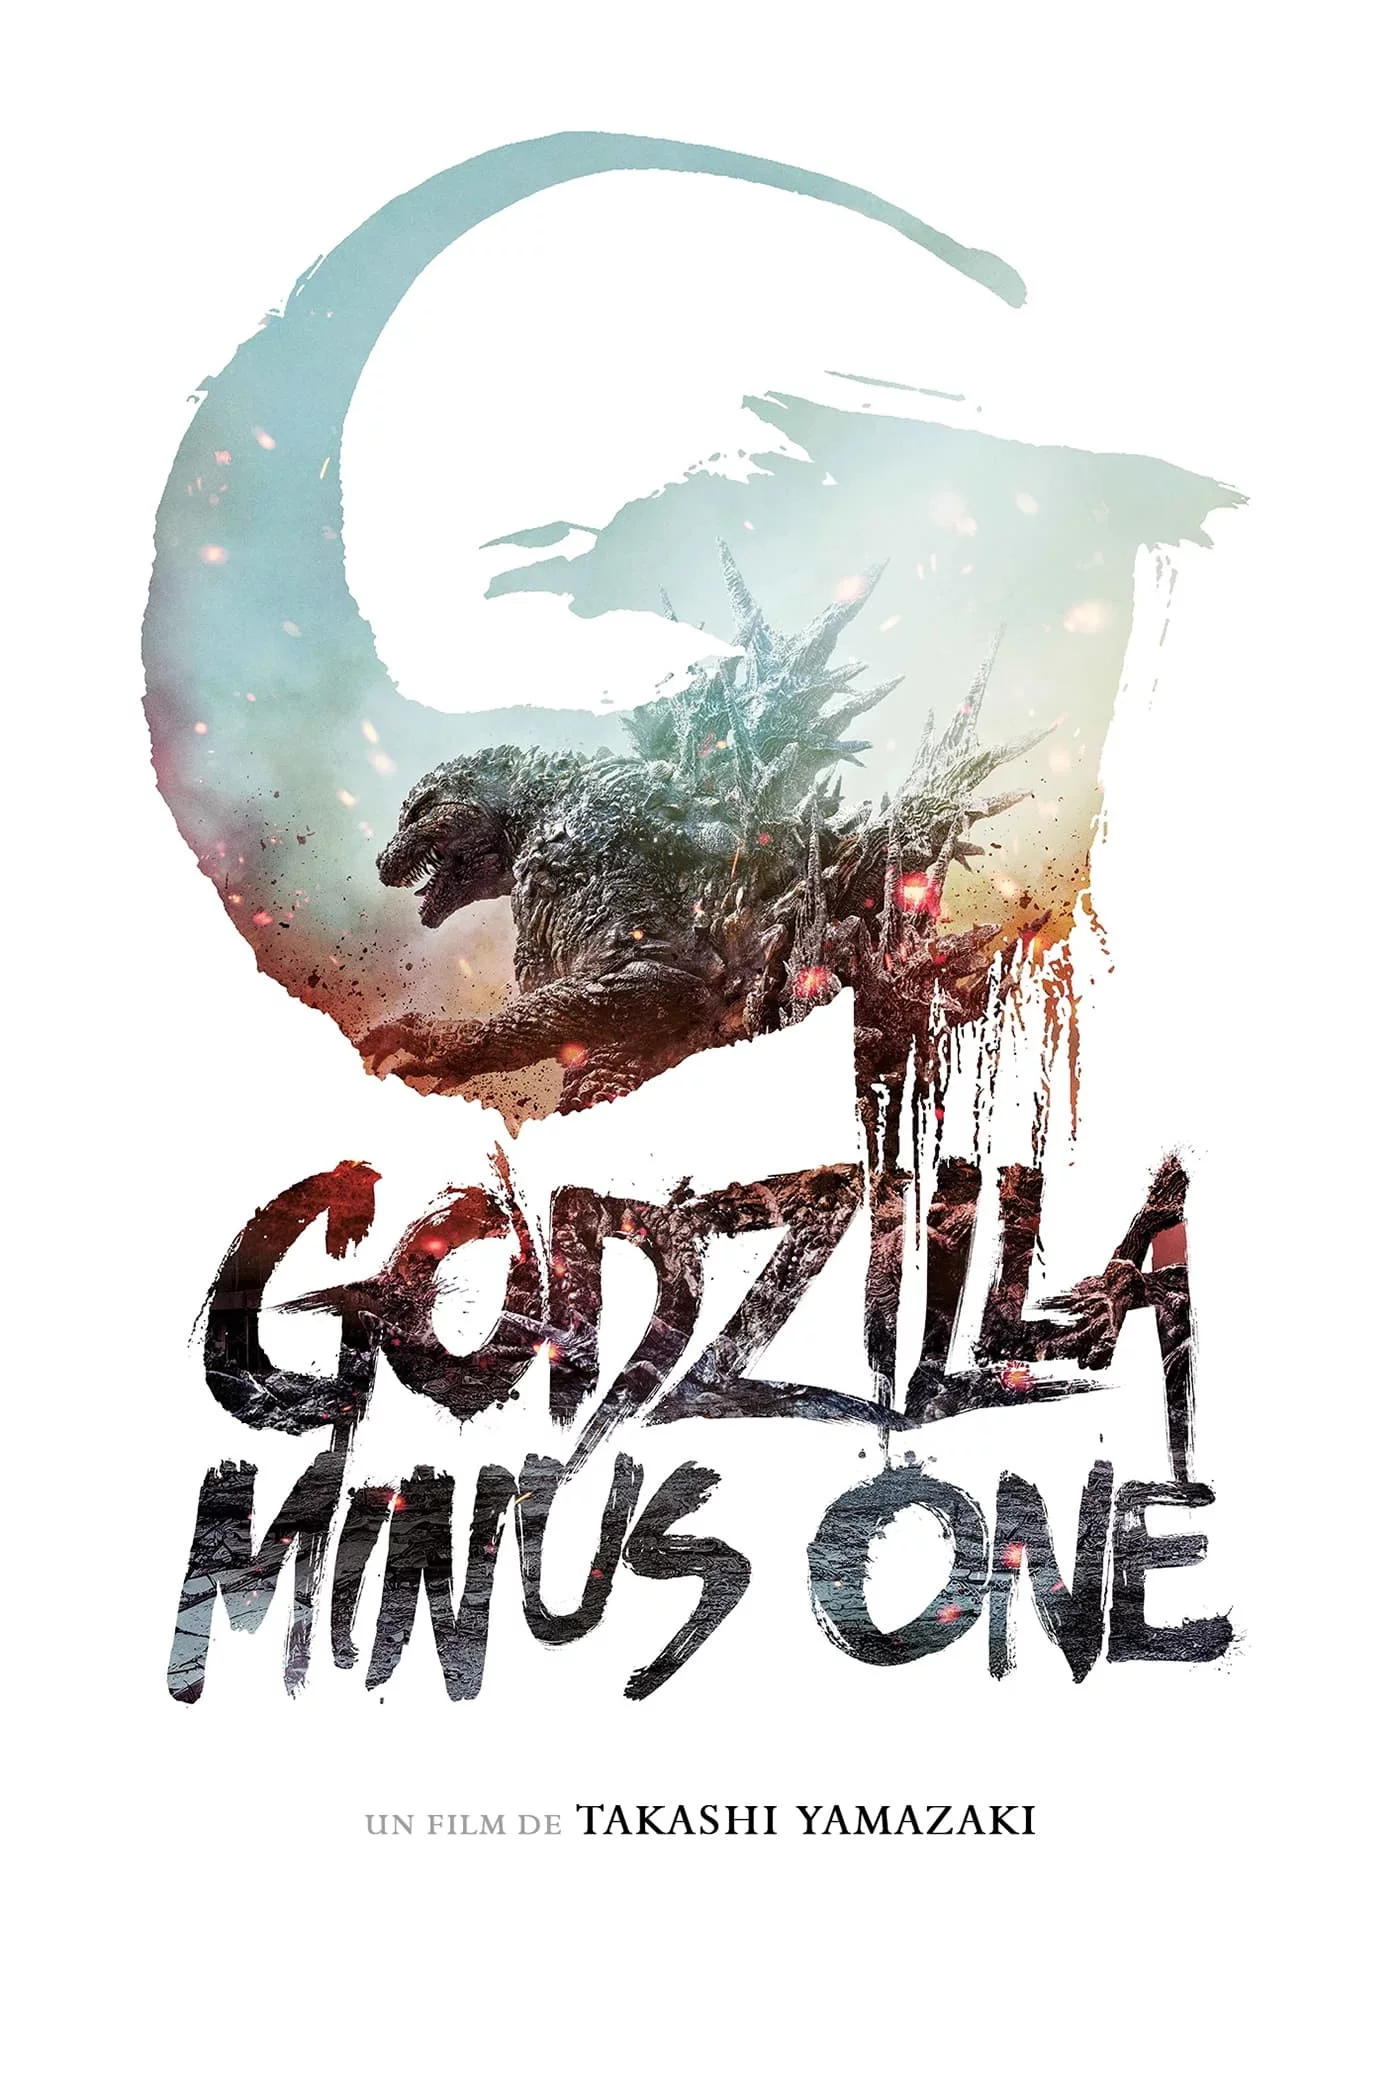 Photo du film : Godzilla Minus One